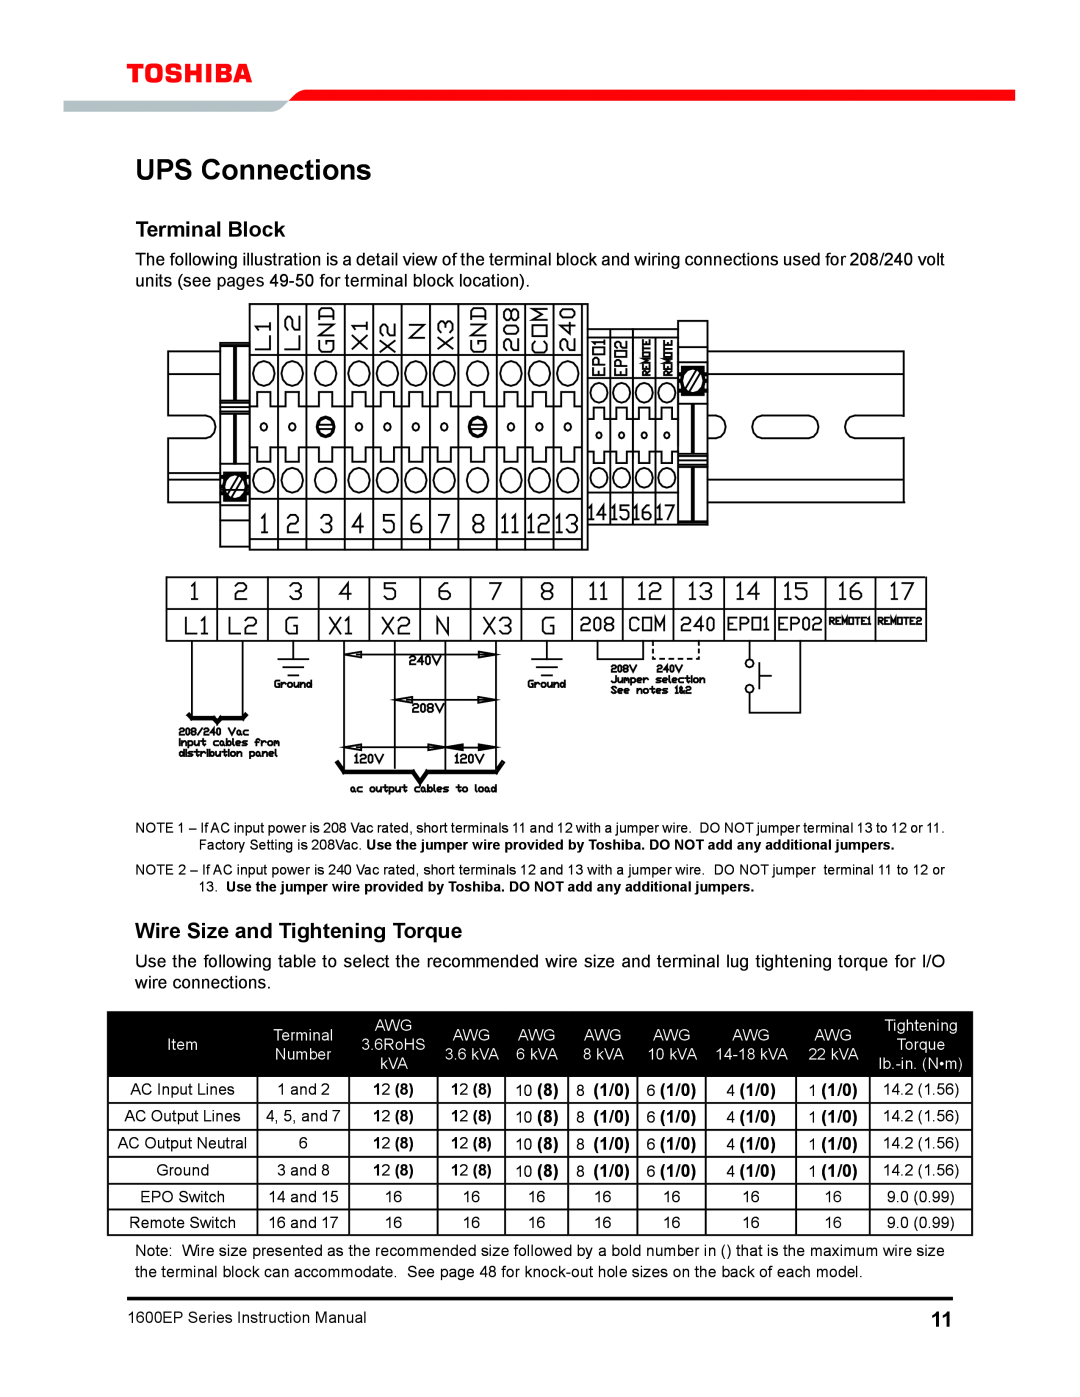 Toshiba 1600EP Series manual UPS Connections, 6 1/0, 4 1/0, 1 1/0 